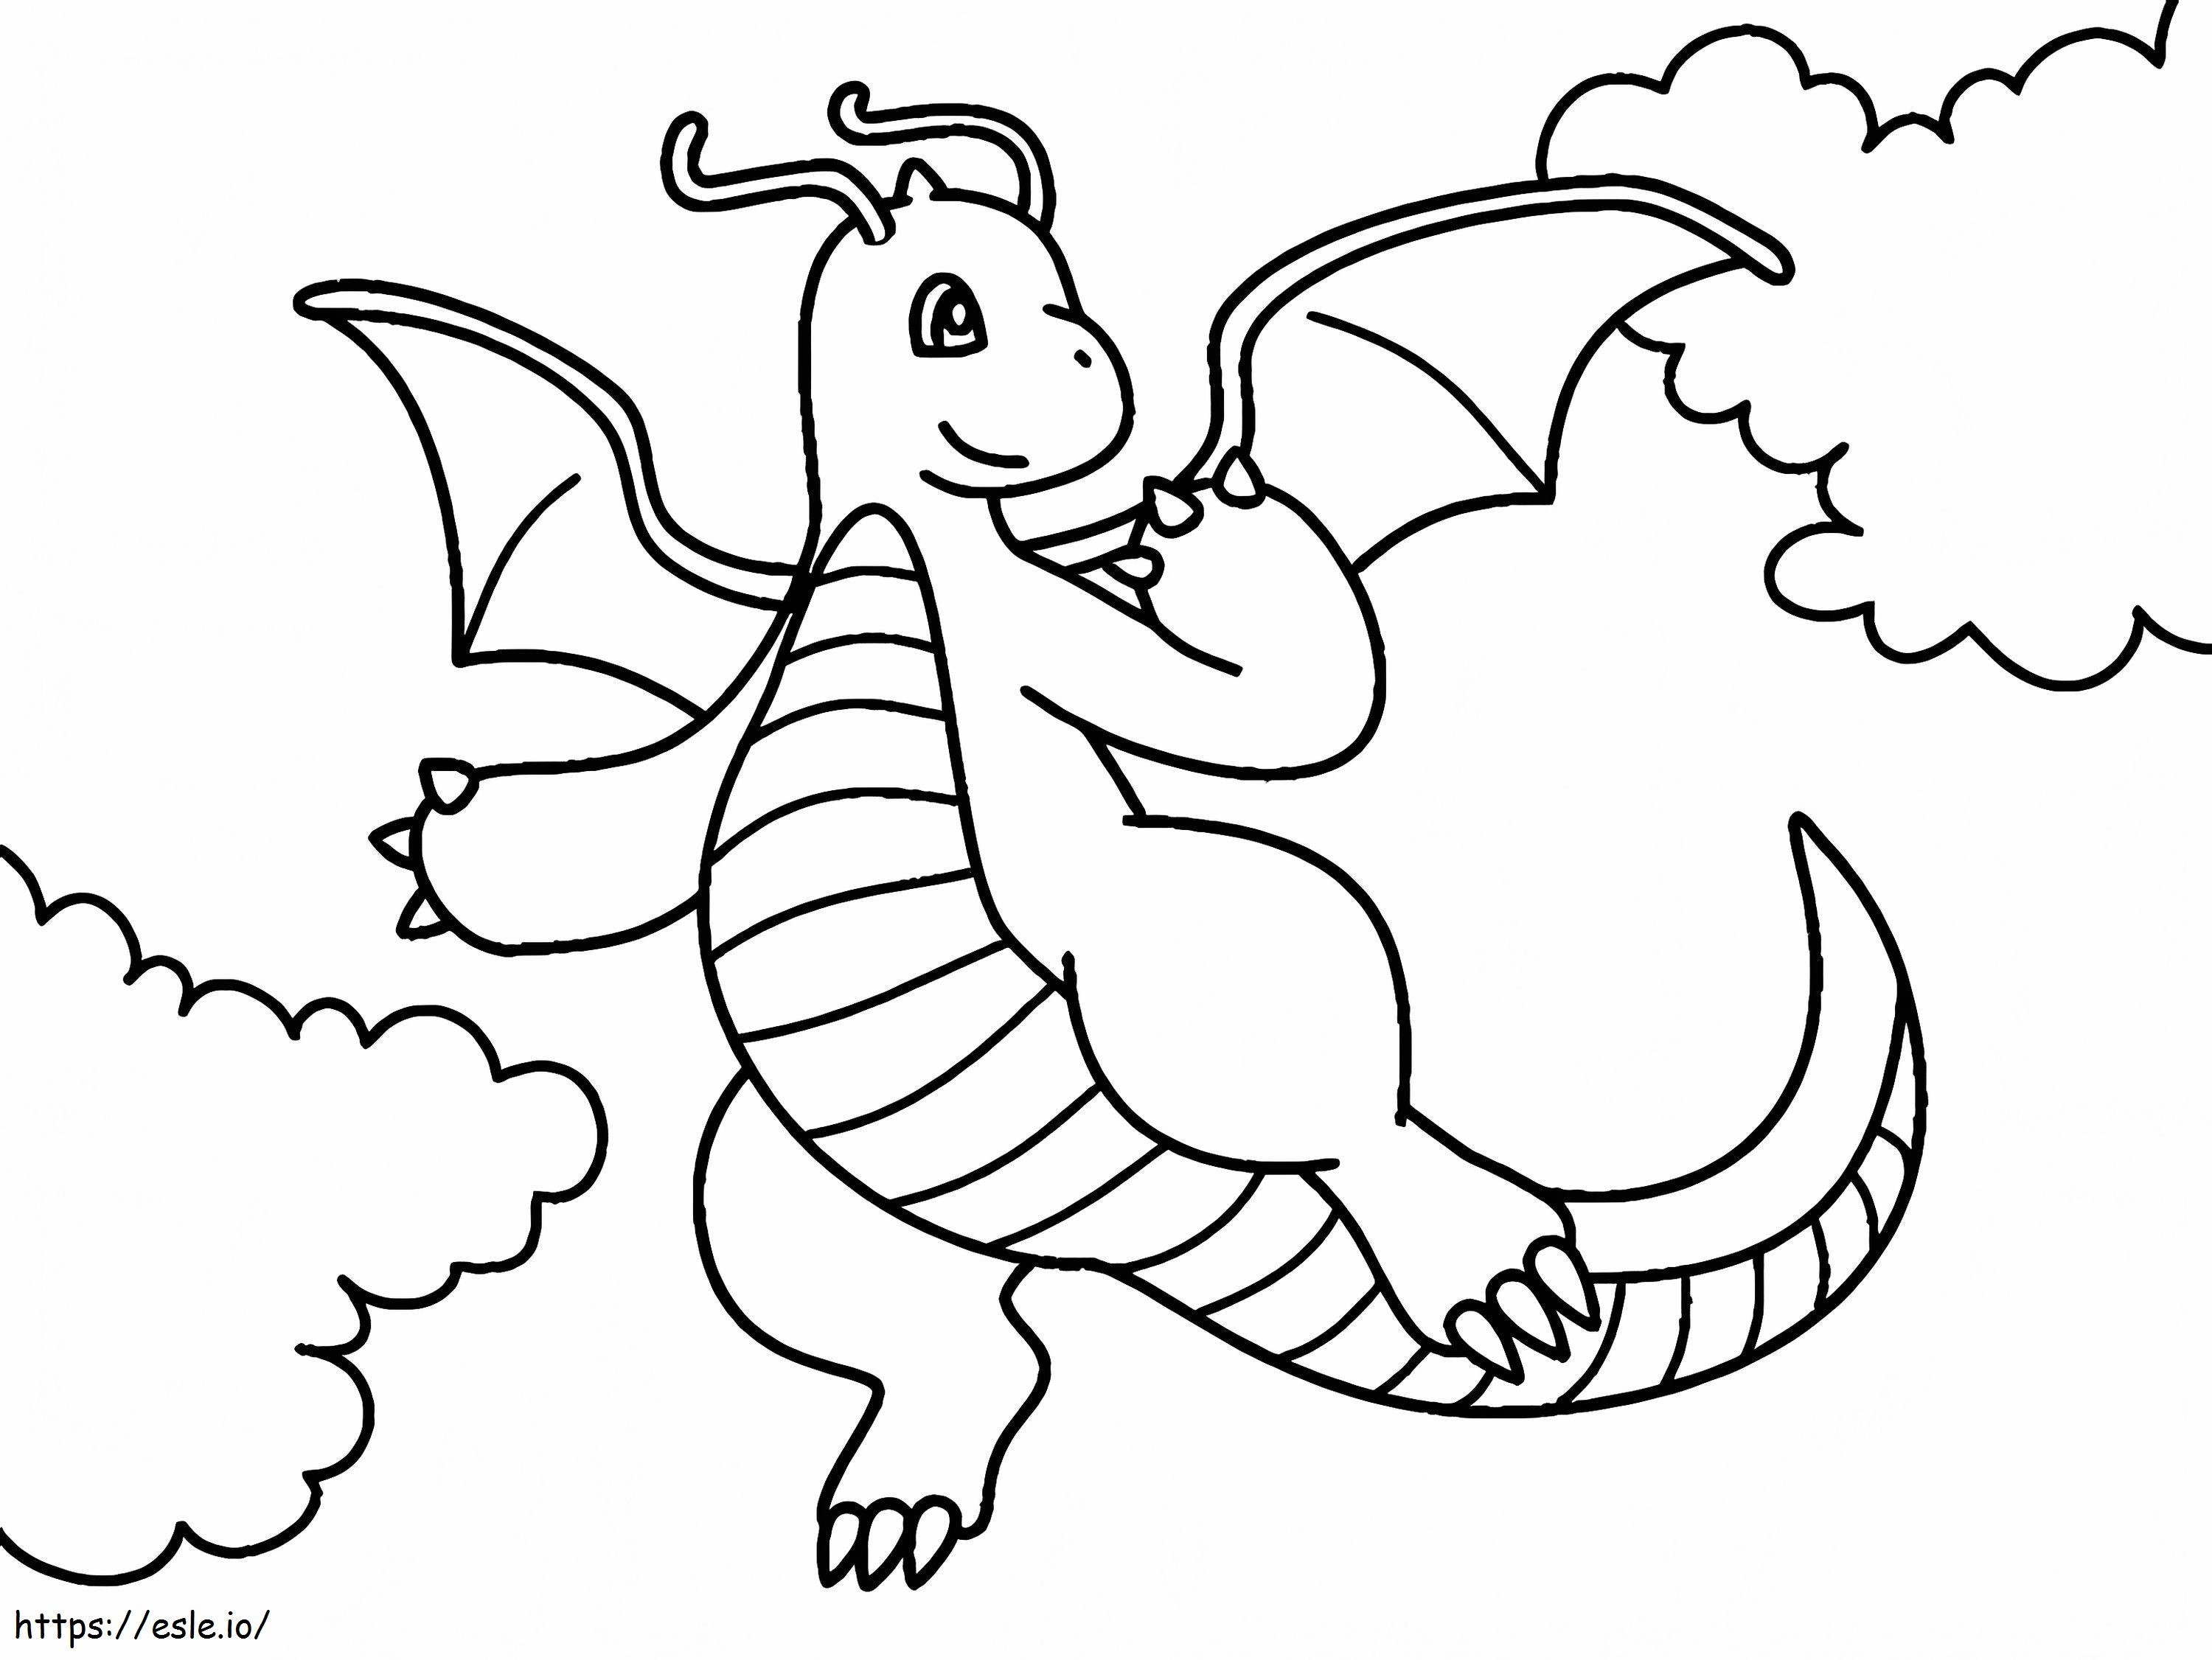 Dragonite 4 coloring page